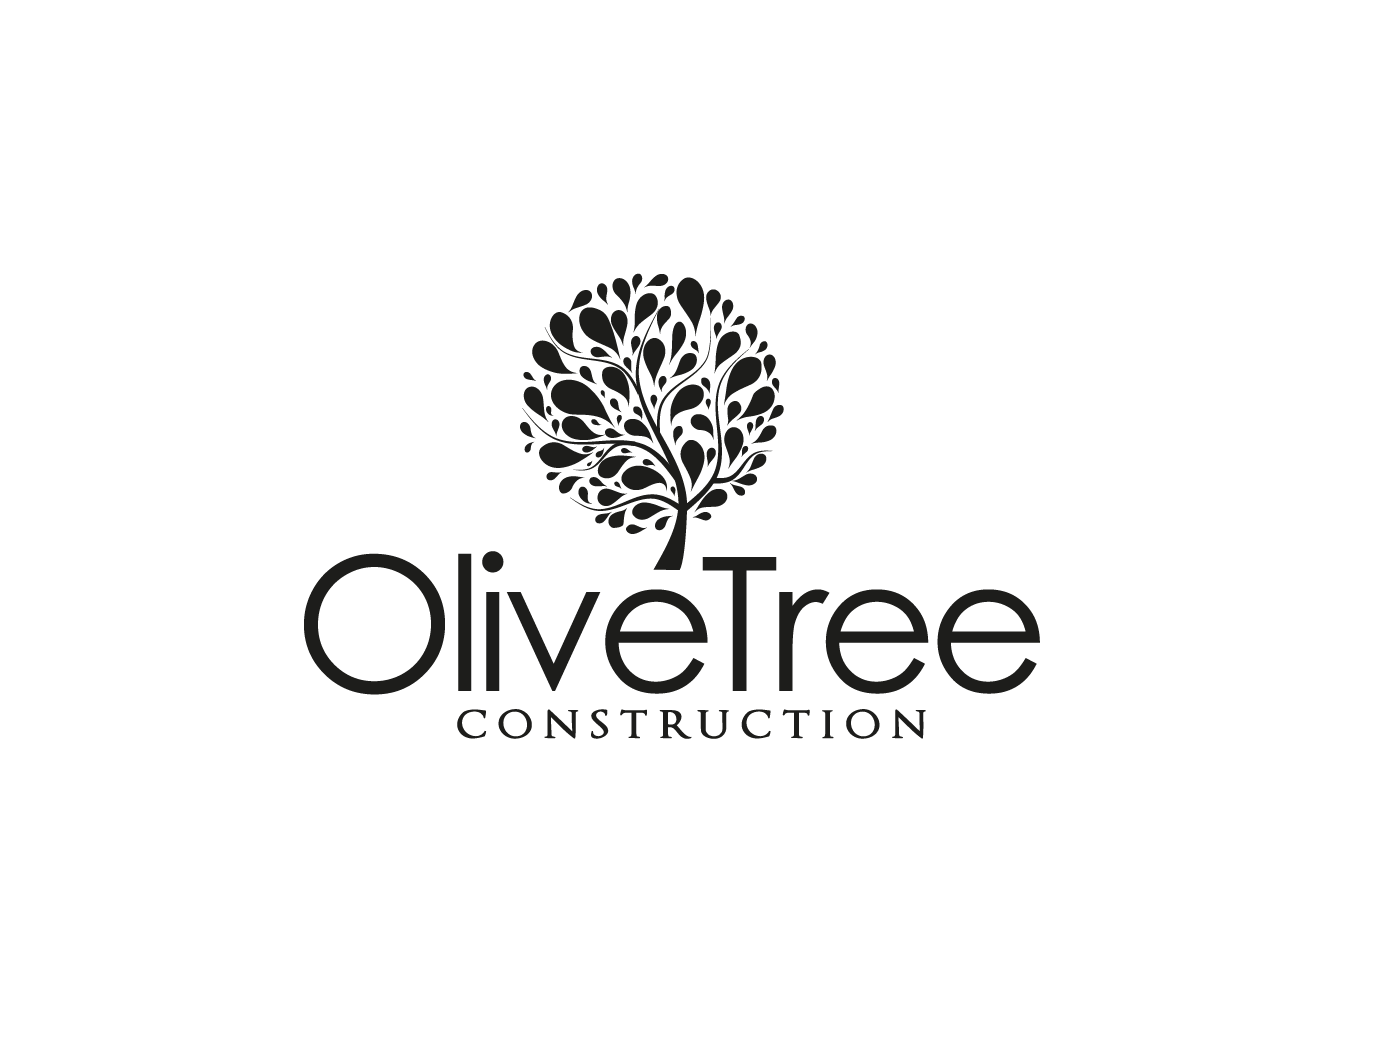 Olive Tree Logo - Modern, Professional, Construction Logo Design for Olive Tree ...